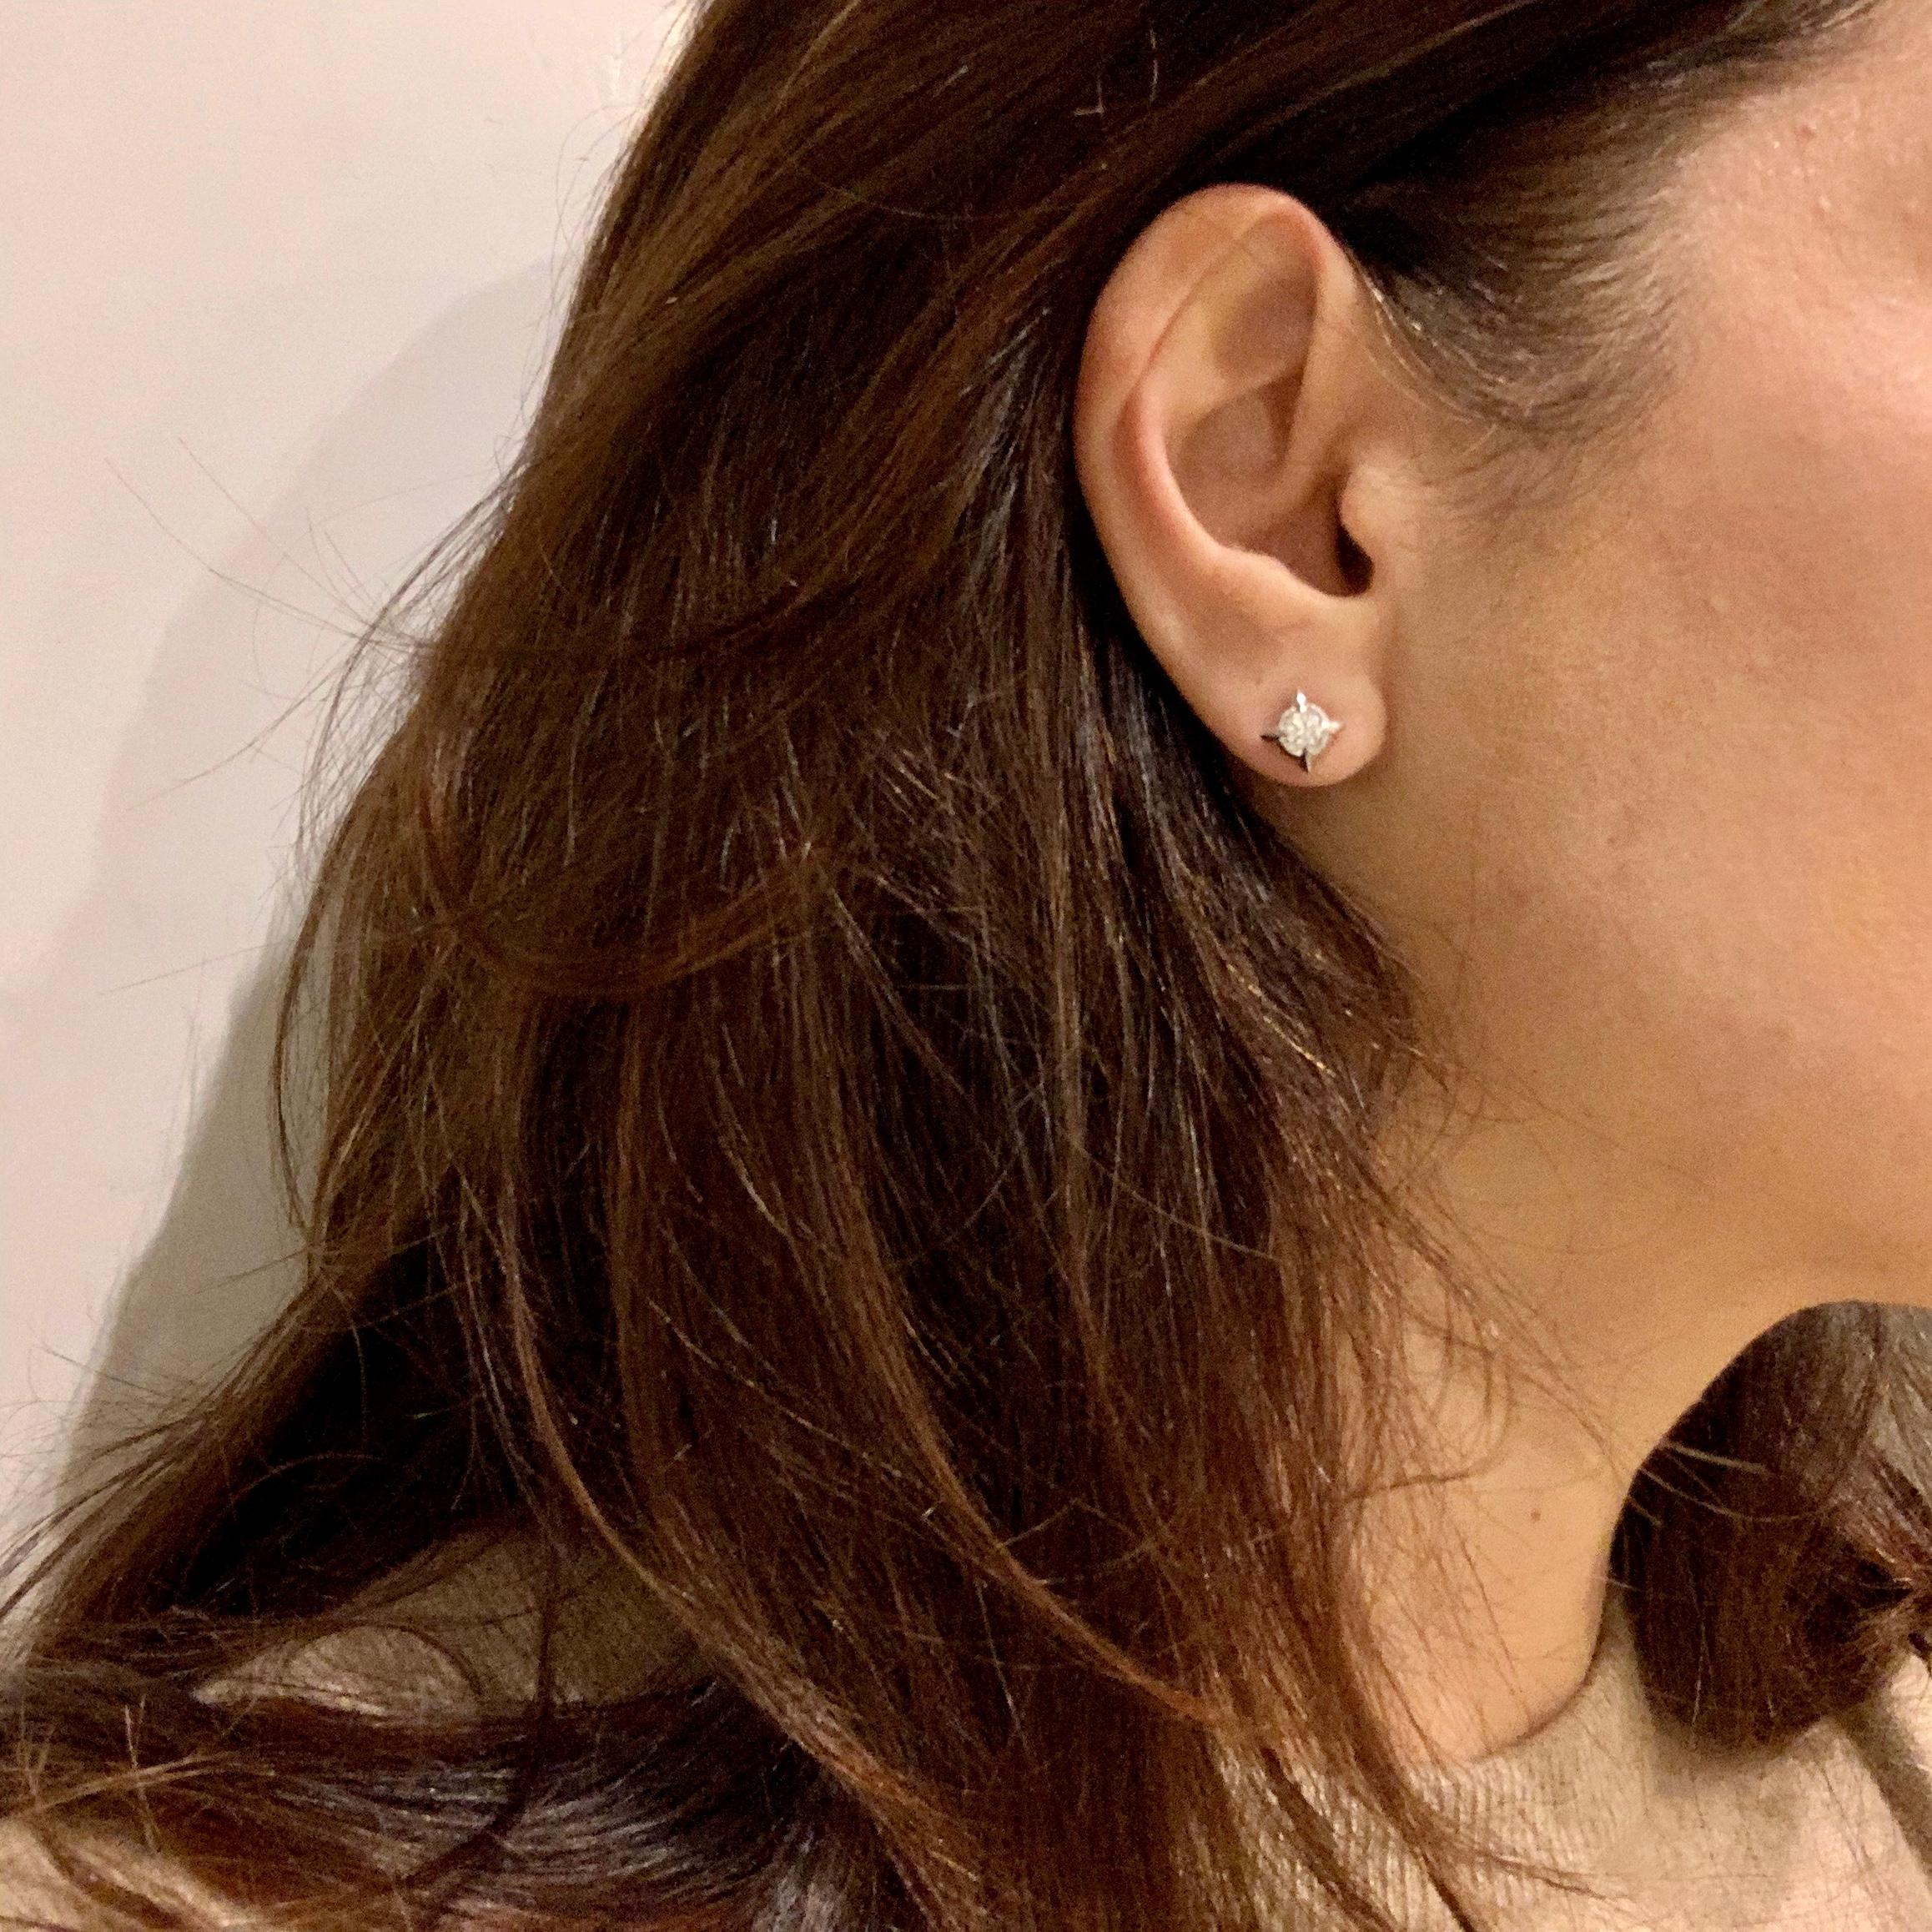 Brilliant Cut 0.47 Carat Diamond Set in 18Kt White Gold Renaissance Stud Earrings